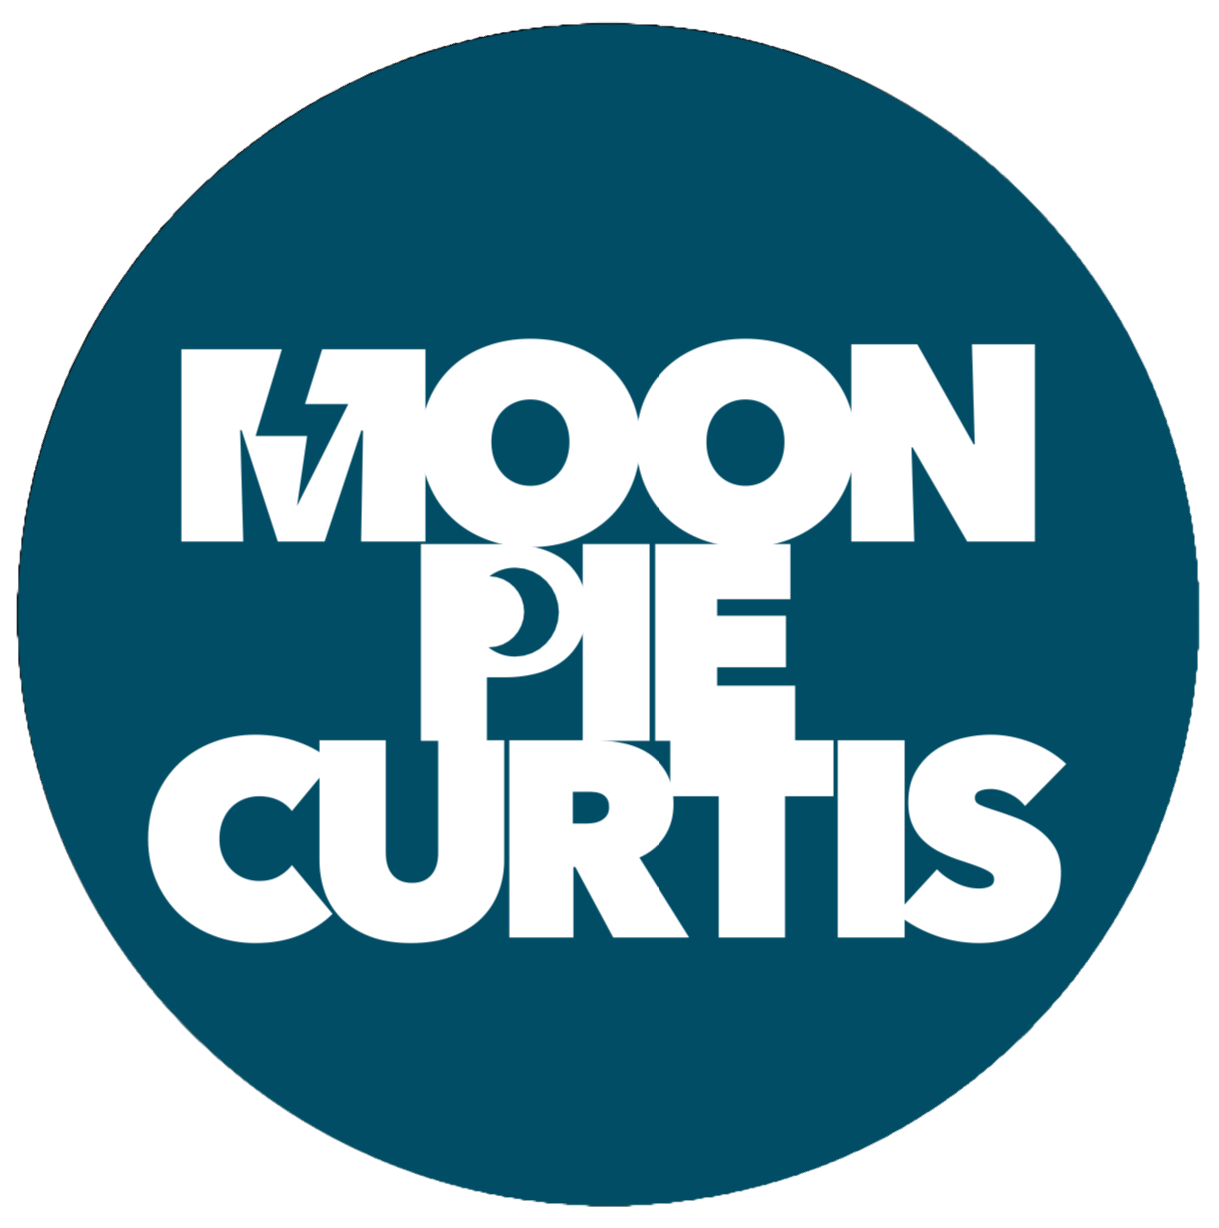 Moon Pie Curtis